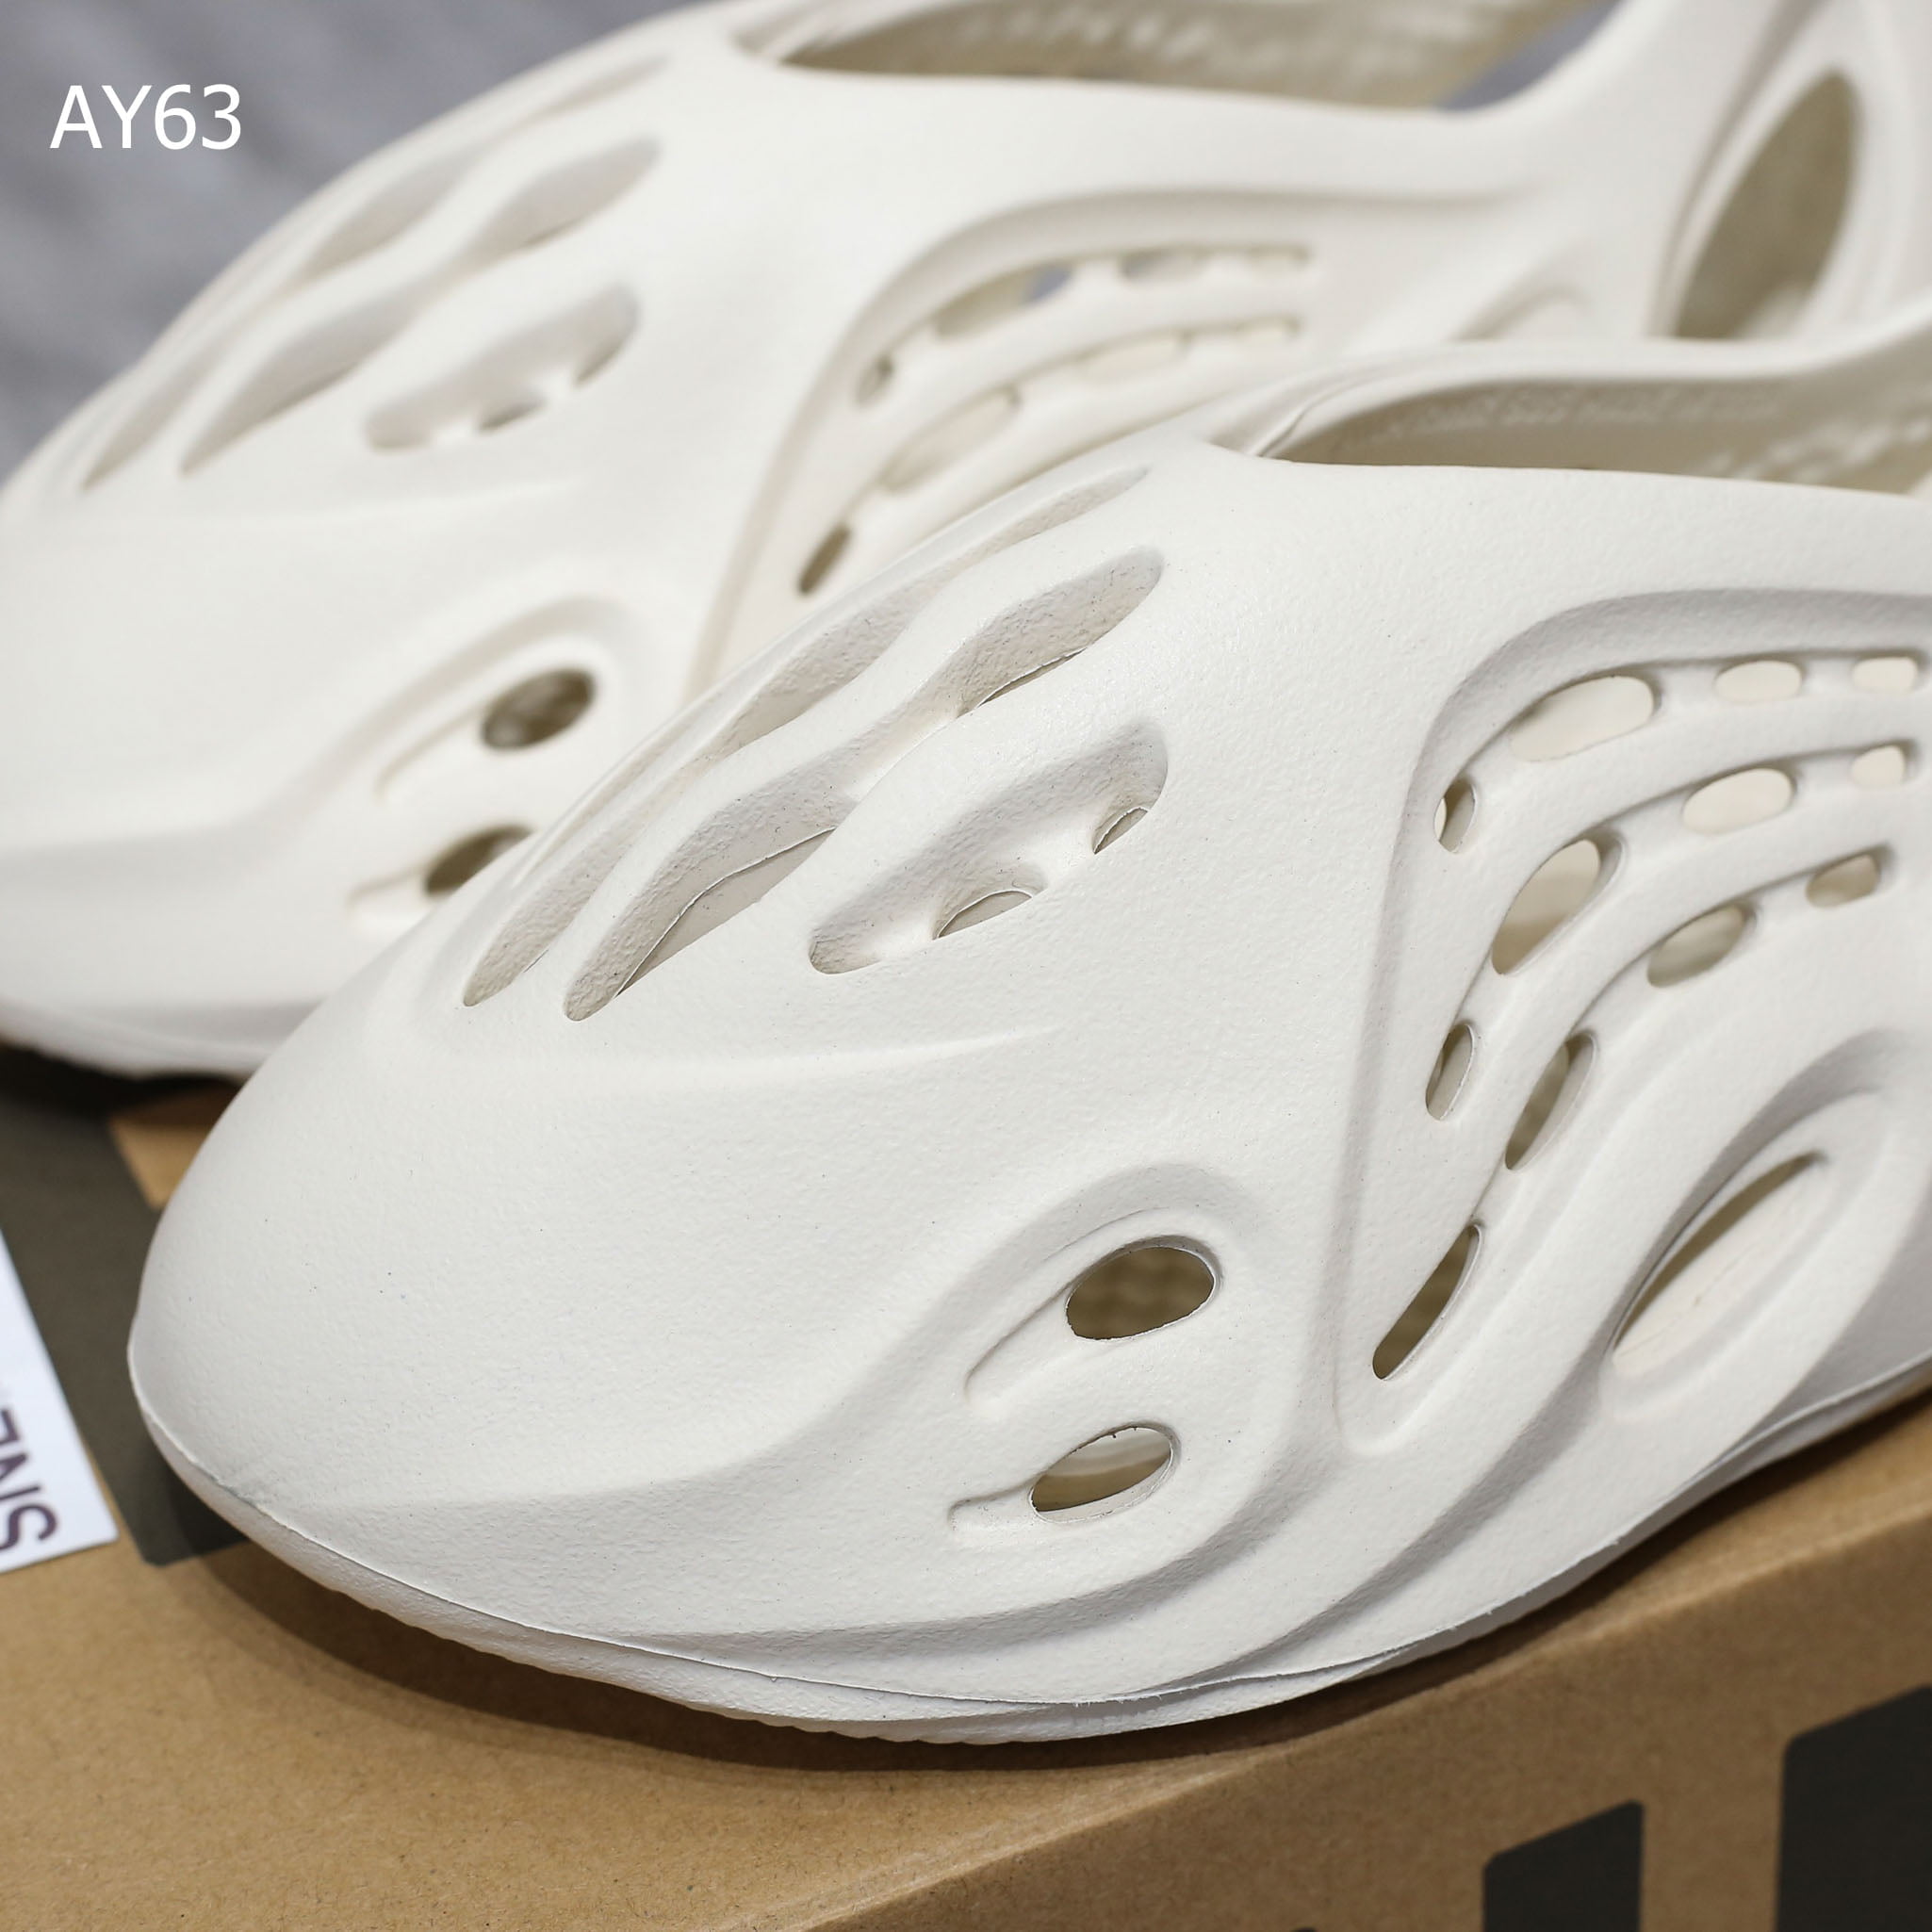 Giày Adidas Yeezy Foam Runner ‘Sand’ Rep 1:1